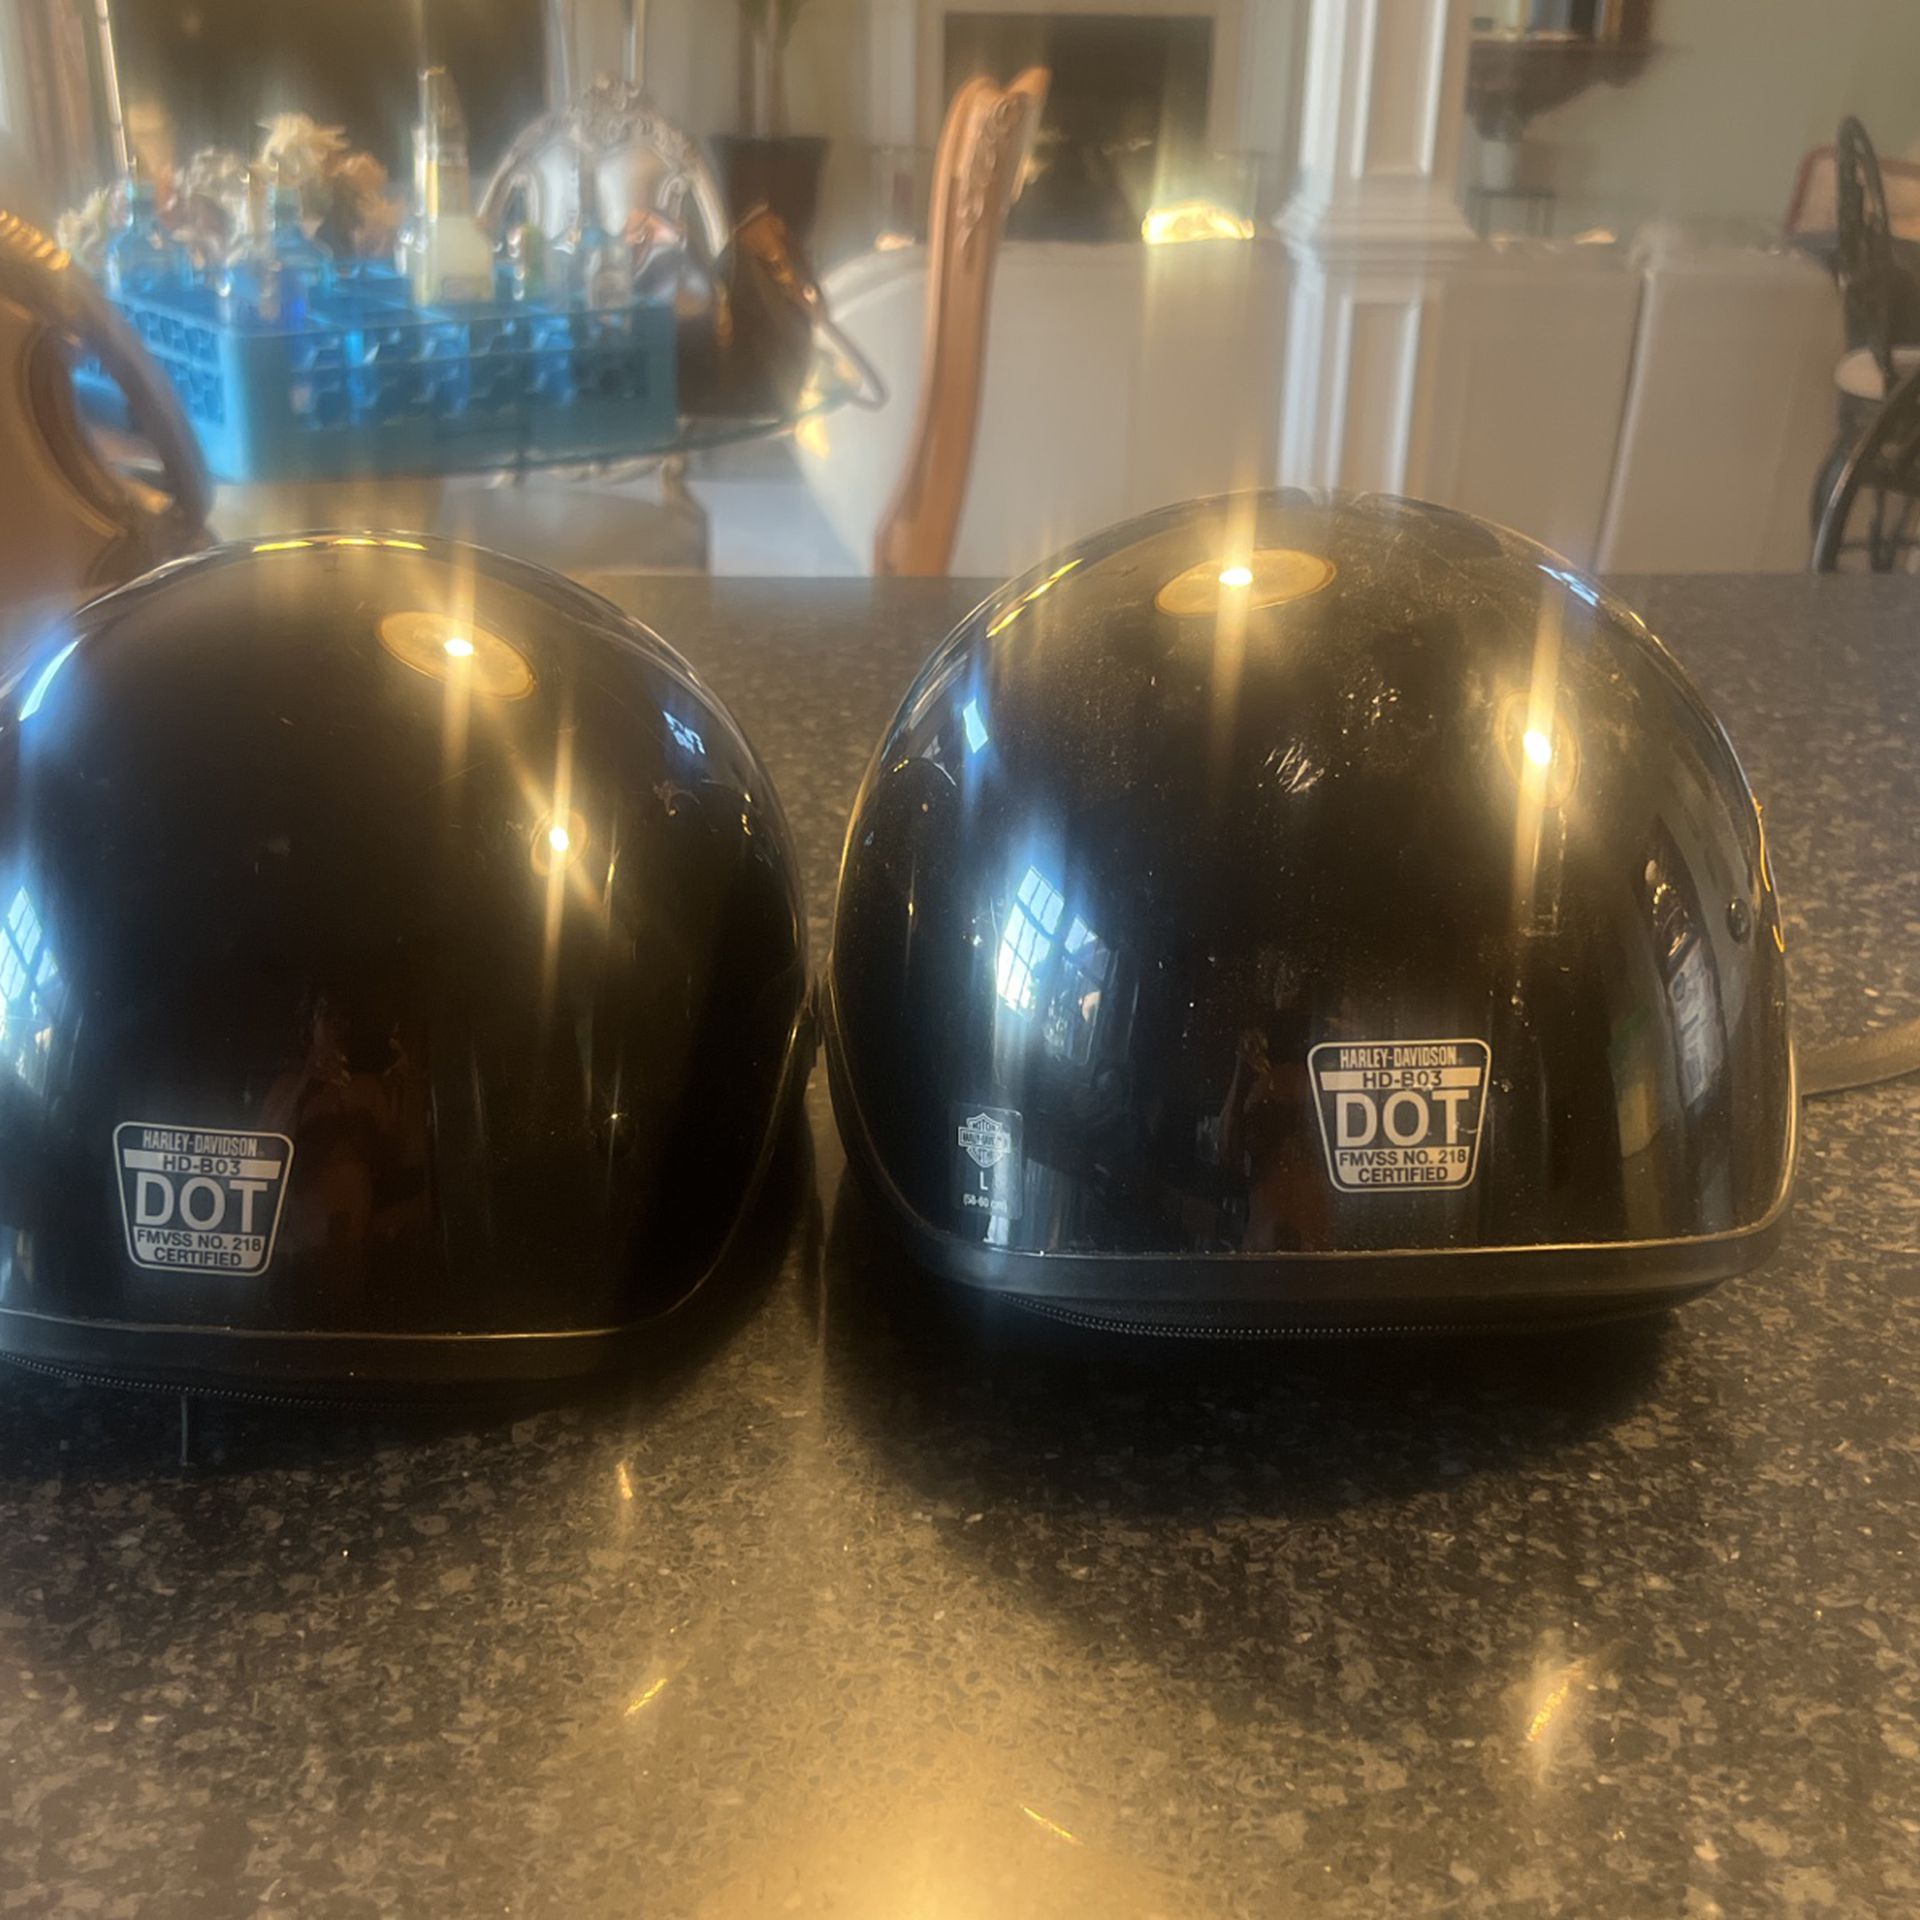 2020 Harley-Davidson Dot helmets